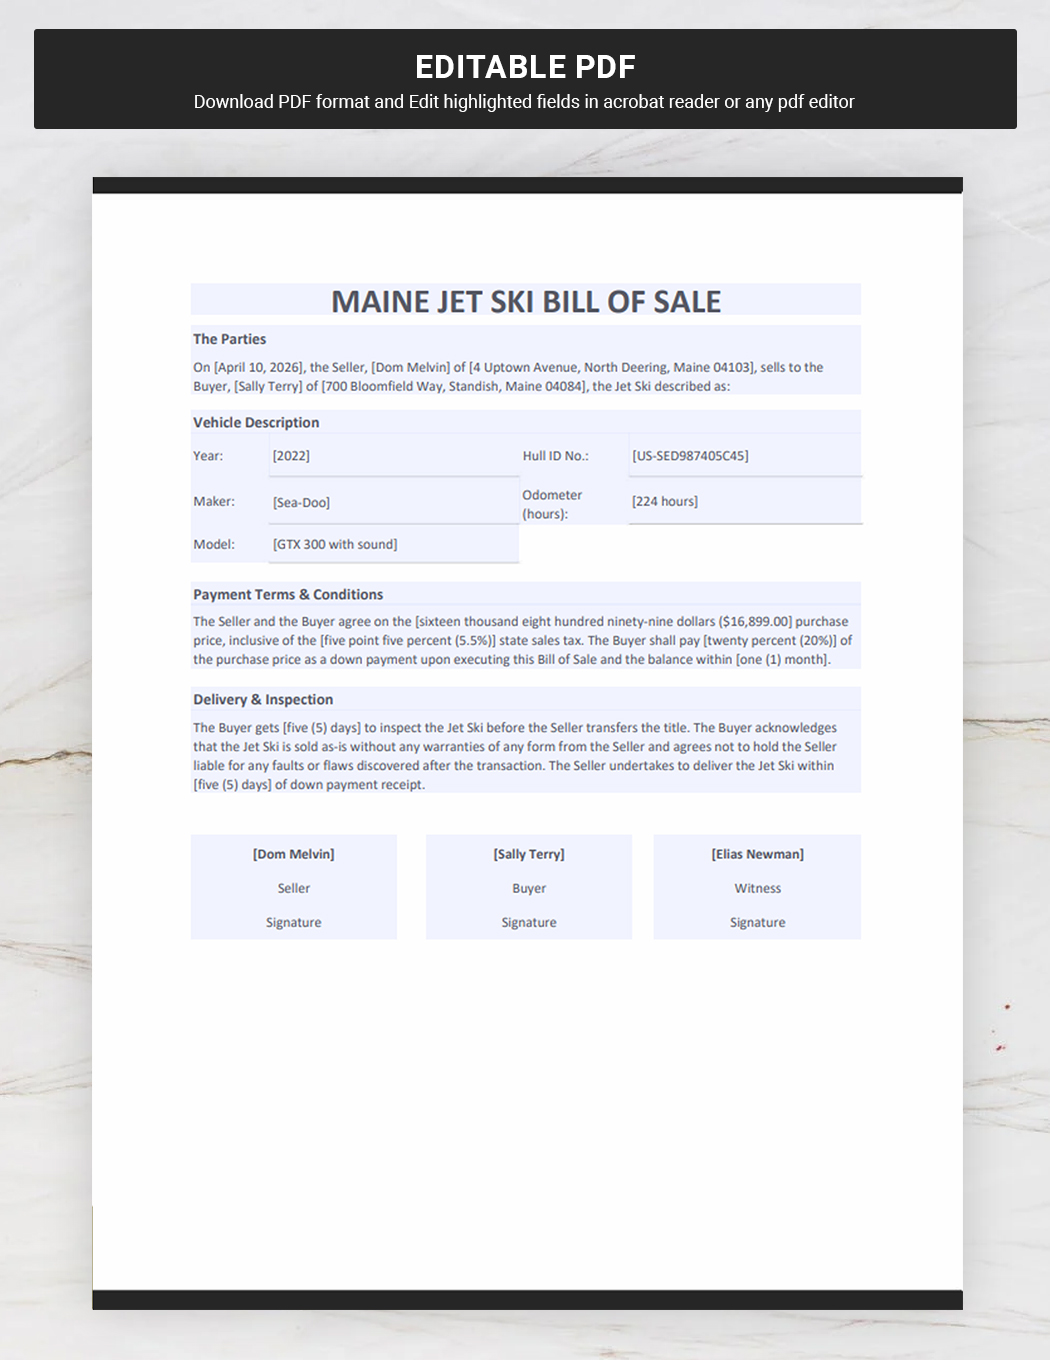 Maine Jet Ski Bill of Sale Template Download in Word, Google Docs